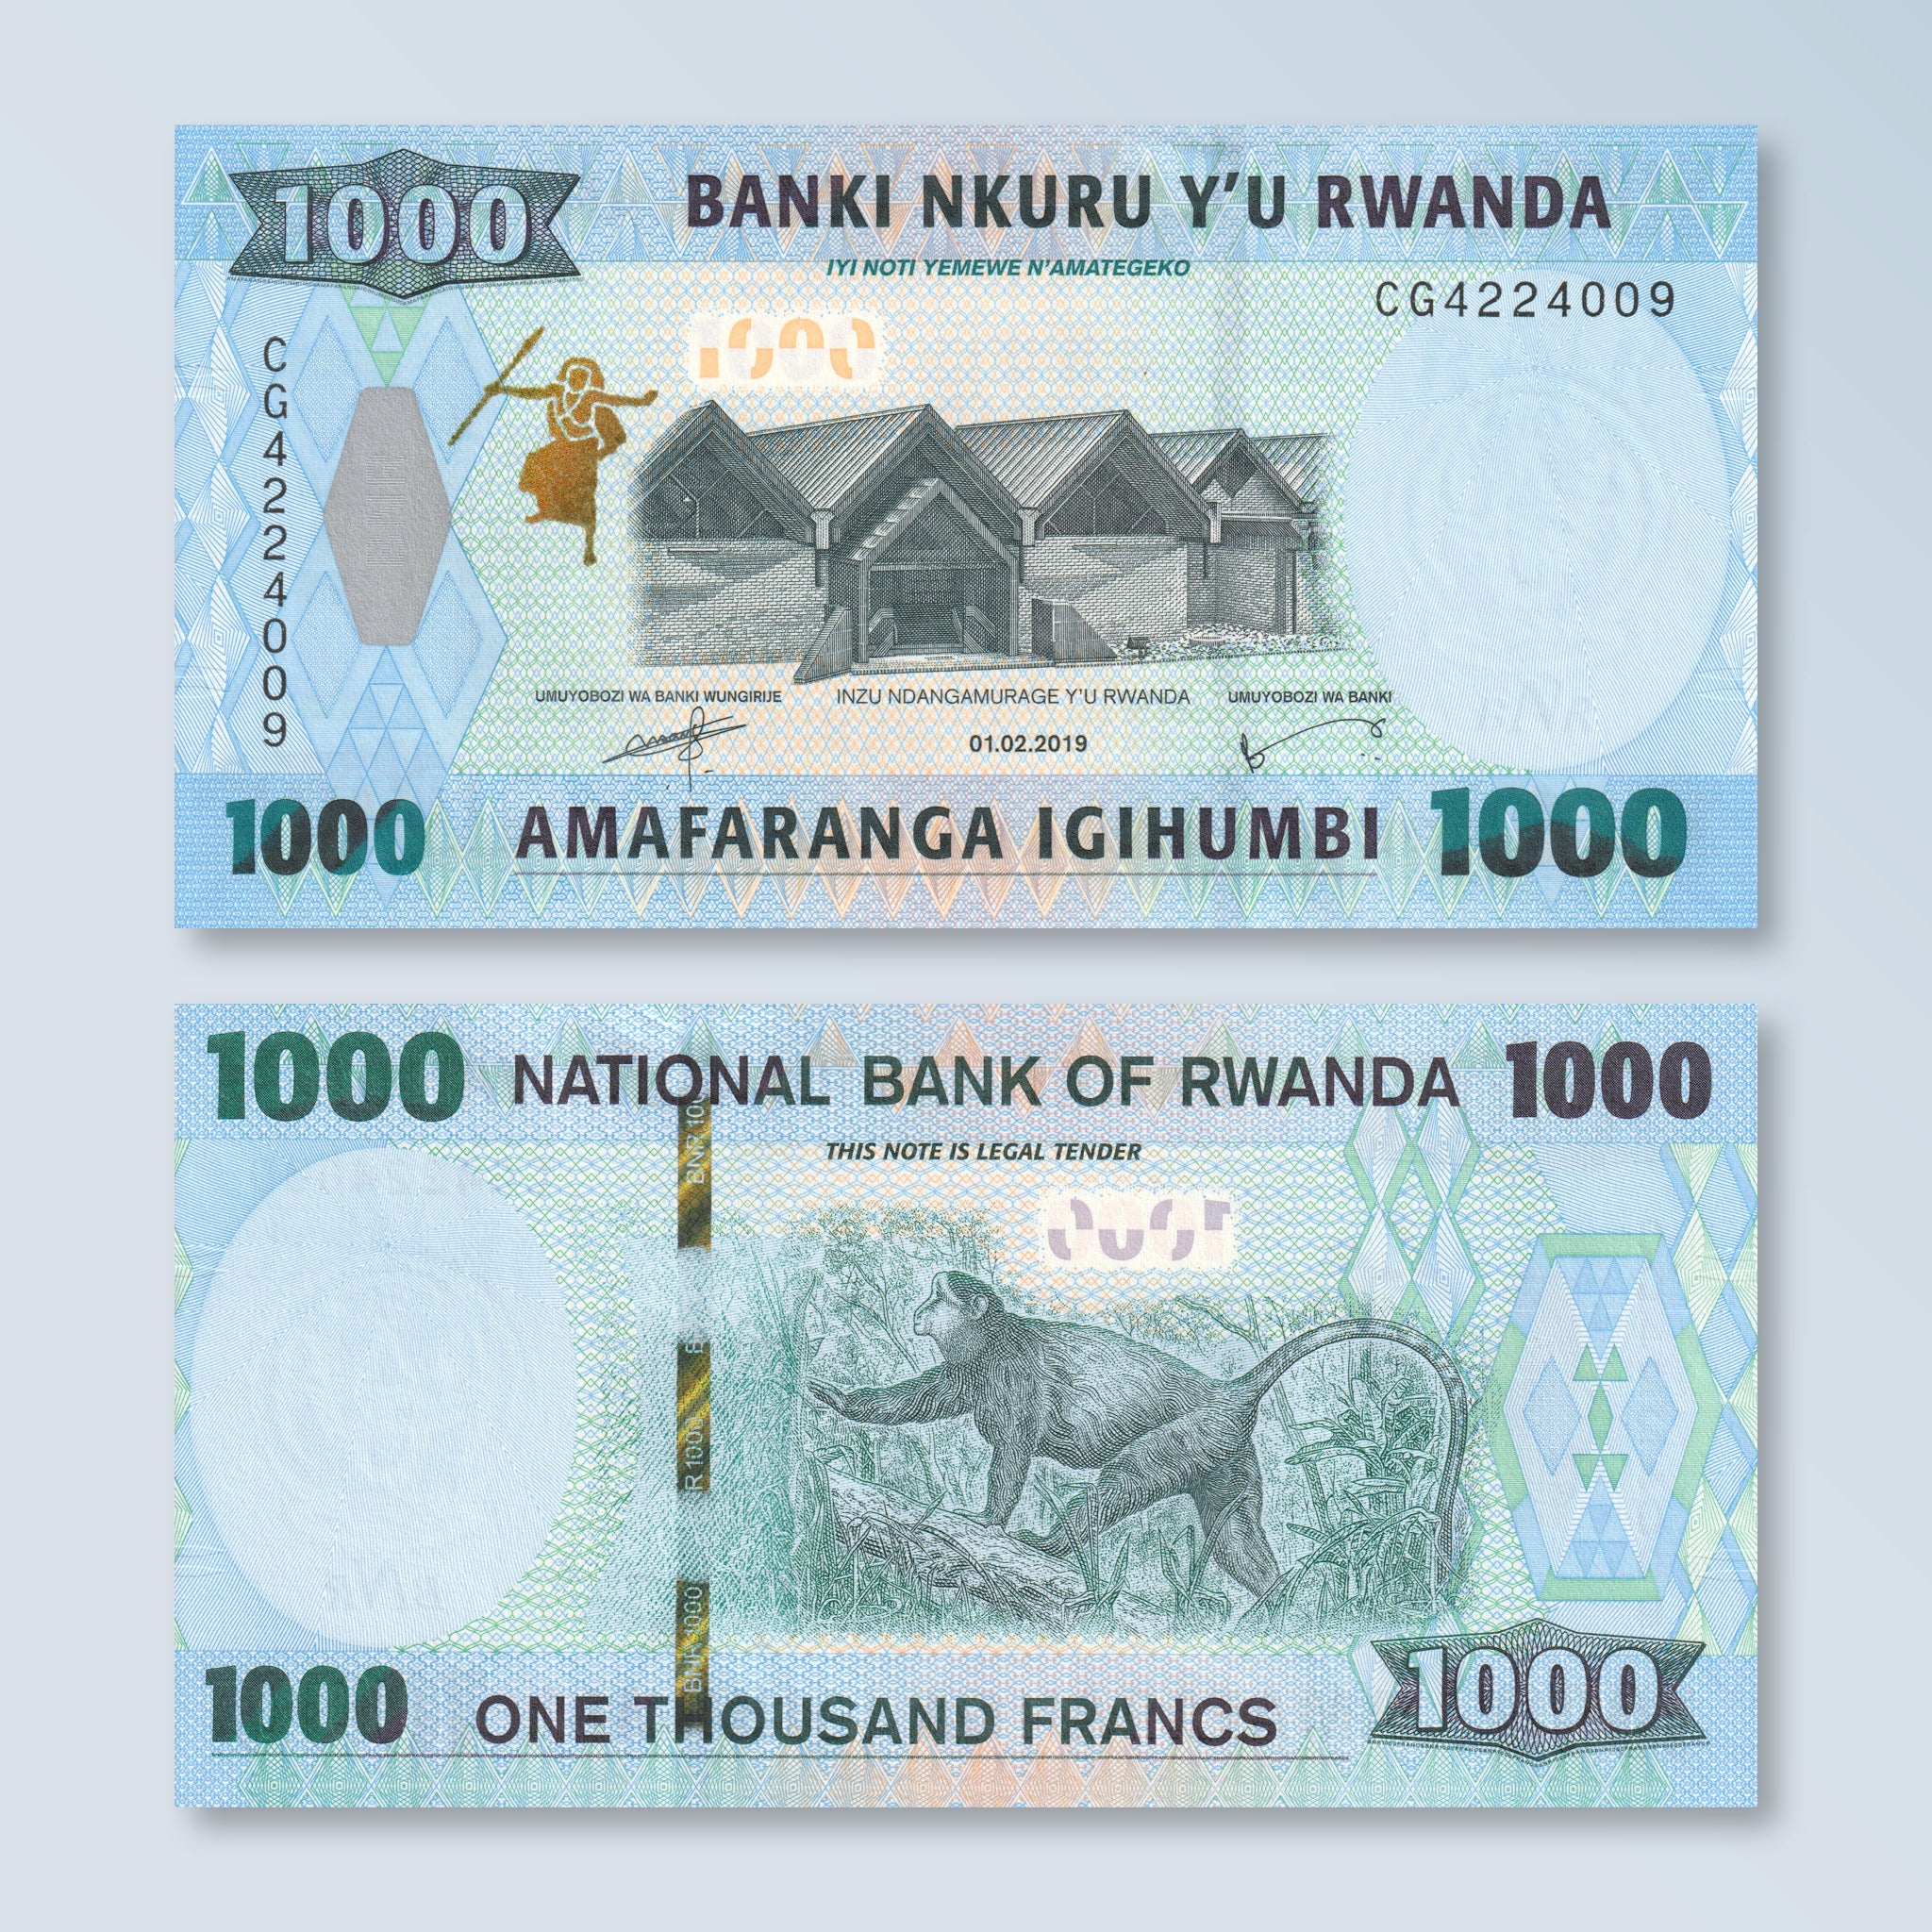 Rwanda 1000 Francs, 2019, B142a, UNC - Robert's World Money - World Banknotes